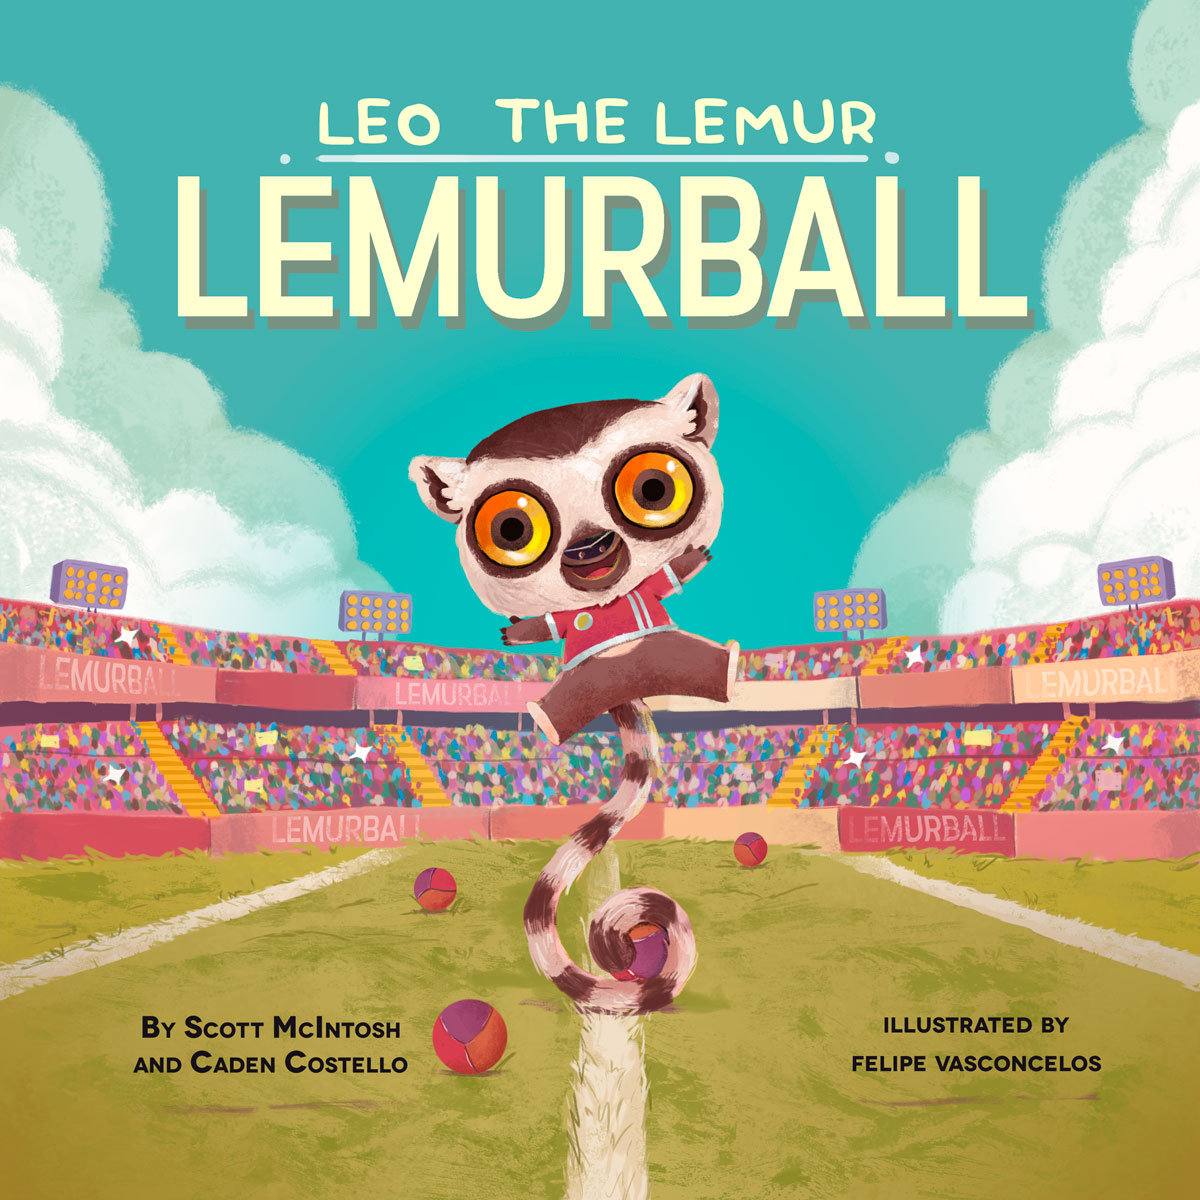 Leo The Lemur: LEMURBALL